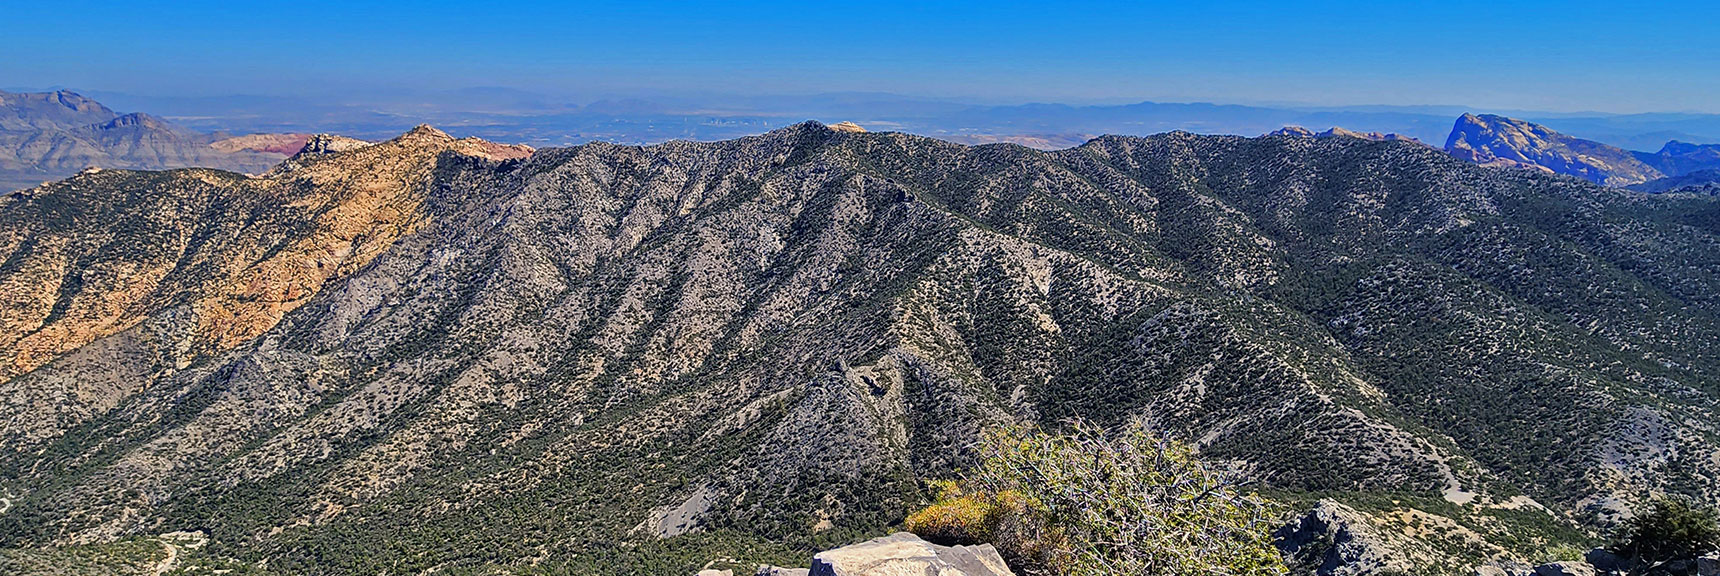 Rainbow Mts. Upper Crest Ridgeline from Buffalo Wall Area to Mt. Wilson | Red Rock Summit Loop | Wilson Ridge | Lovell Canyon, Nevada